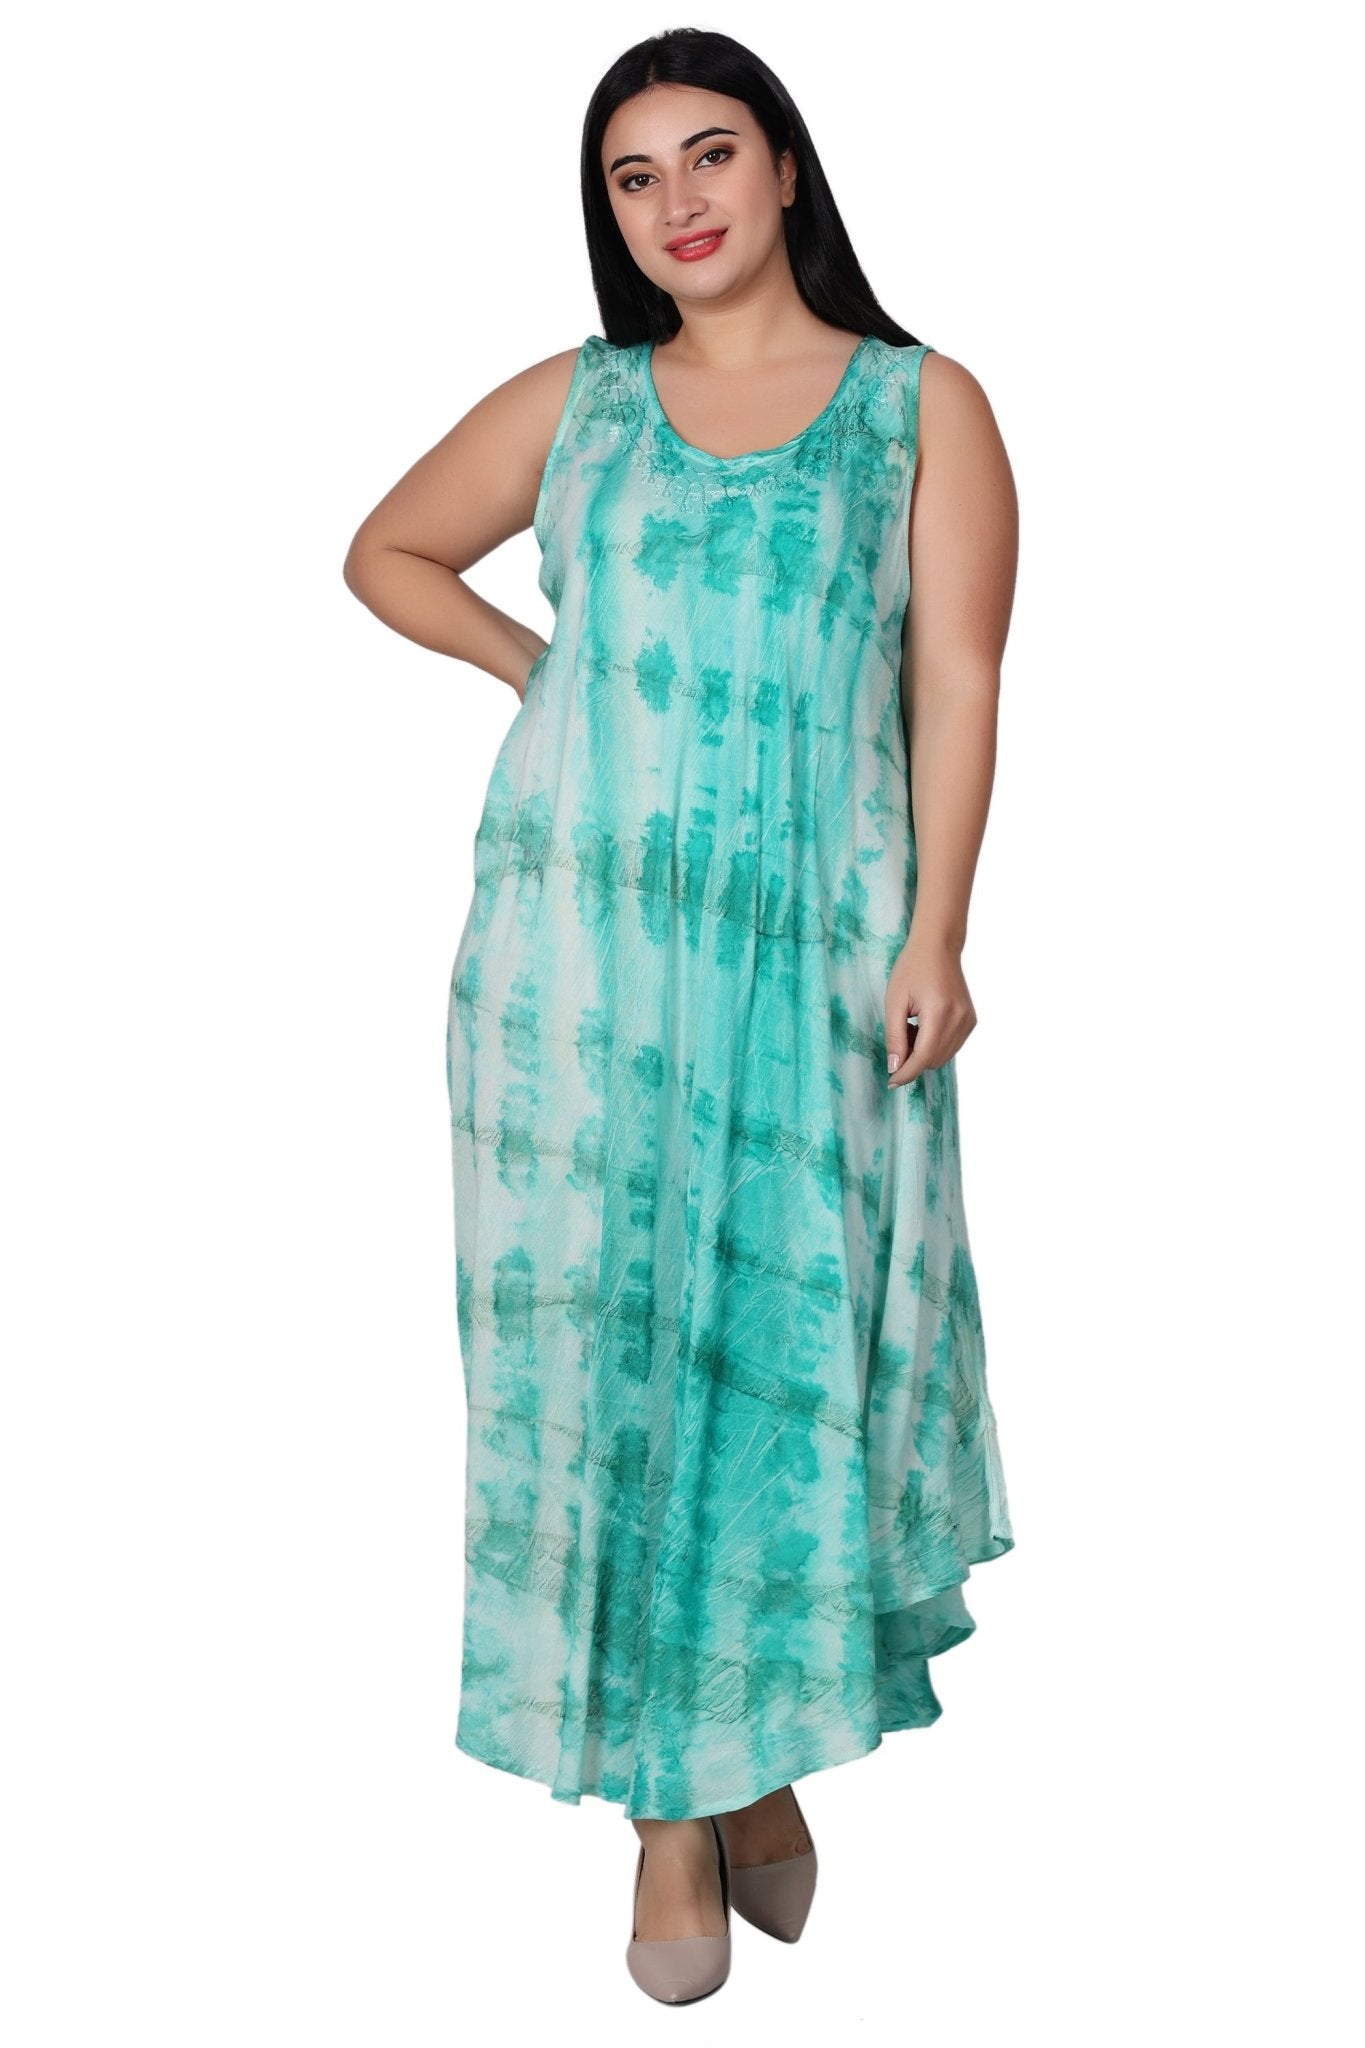 Sleeveless Tie Dye Beach Dress 522138R - Advance Apparels Inc